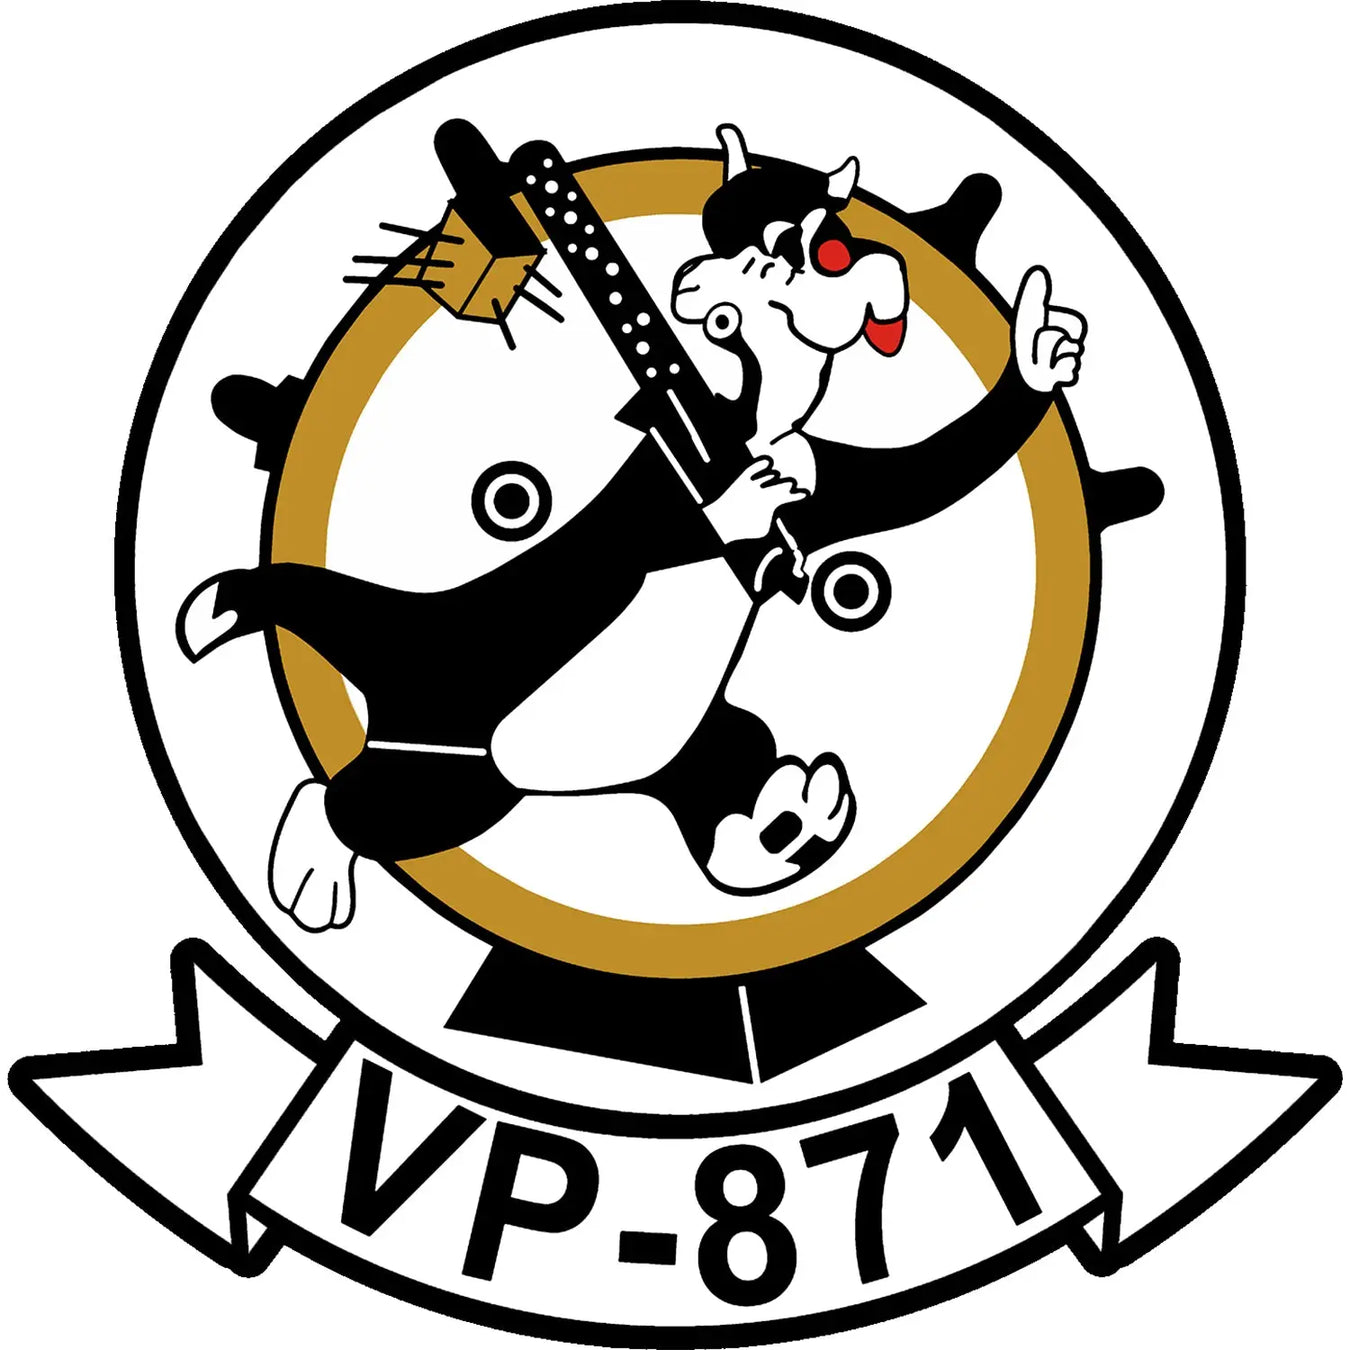 Patrol Squadron 871 (VP-871)